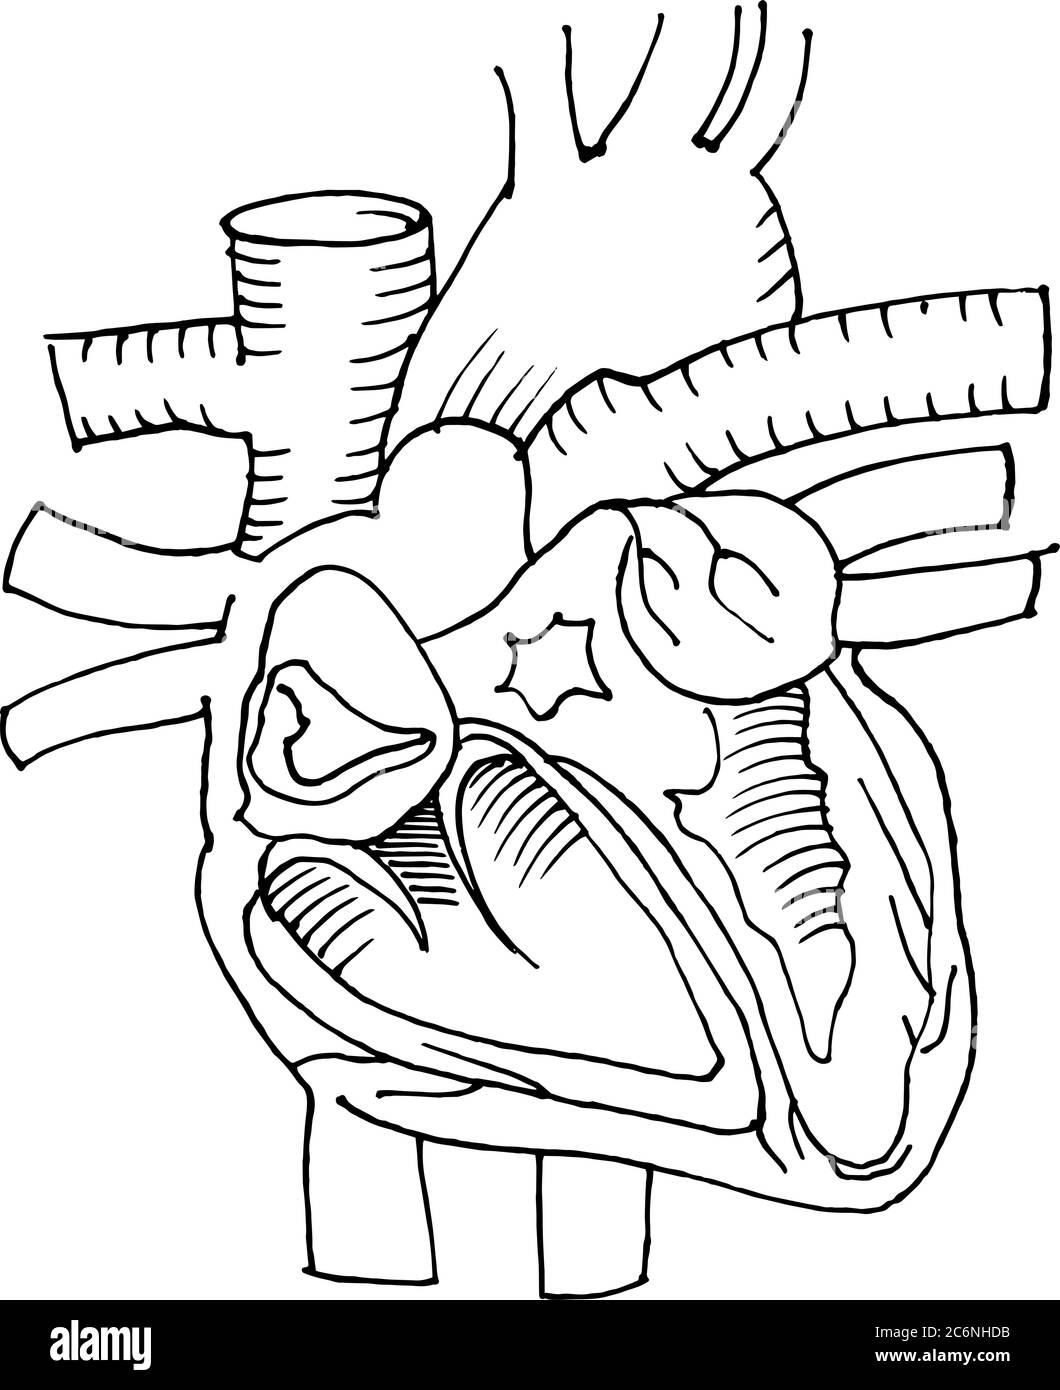 Contour vector outline drawing of human heart organ. Medical design editable template Stock Vector